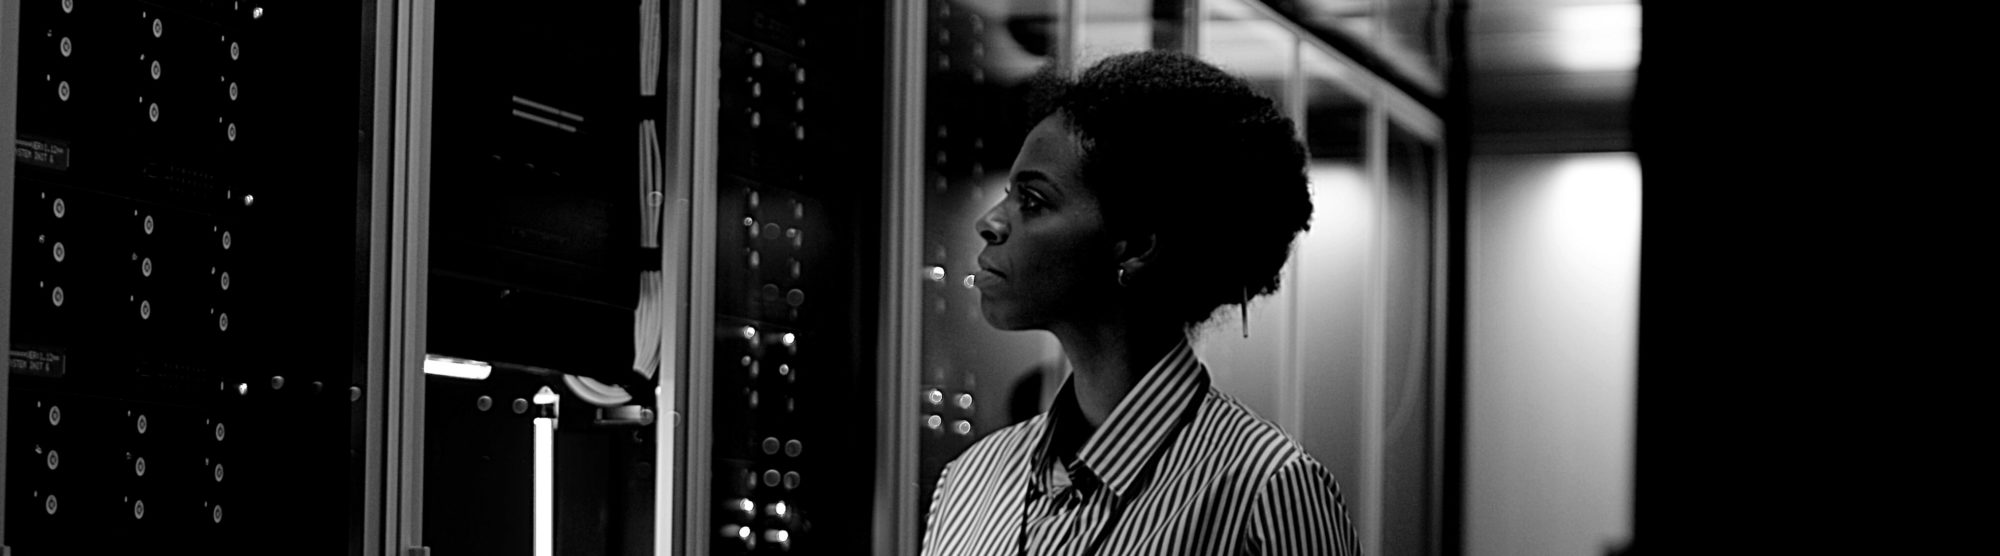 woman in business attire gazes at data center racks